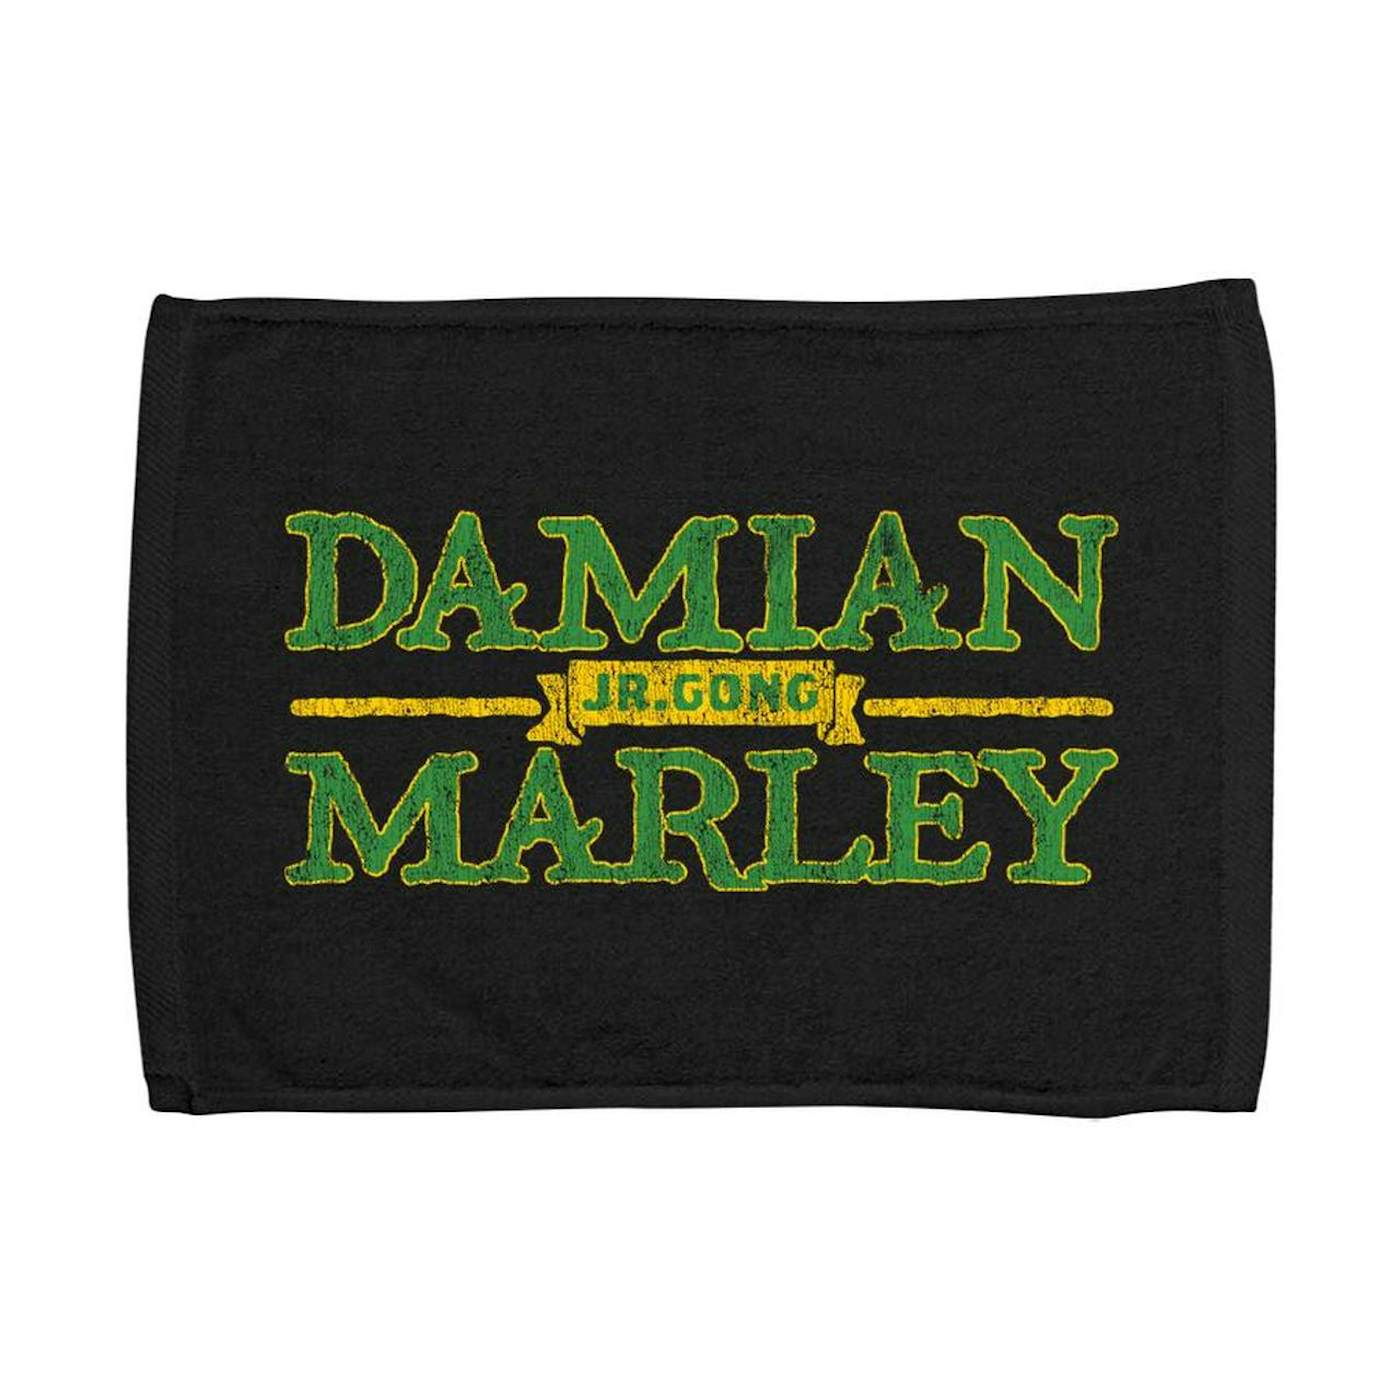 Damian Marley rally towel